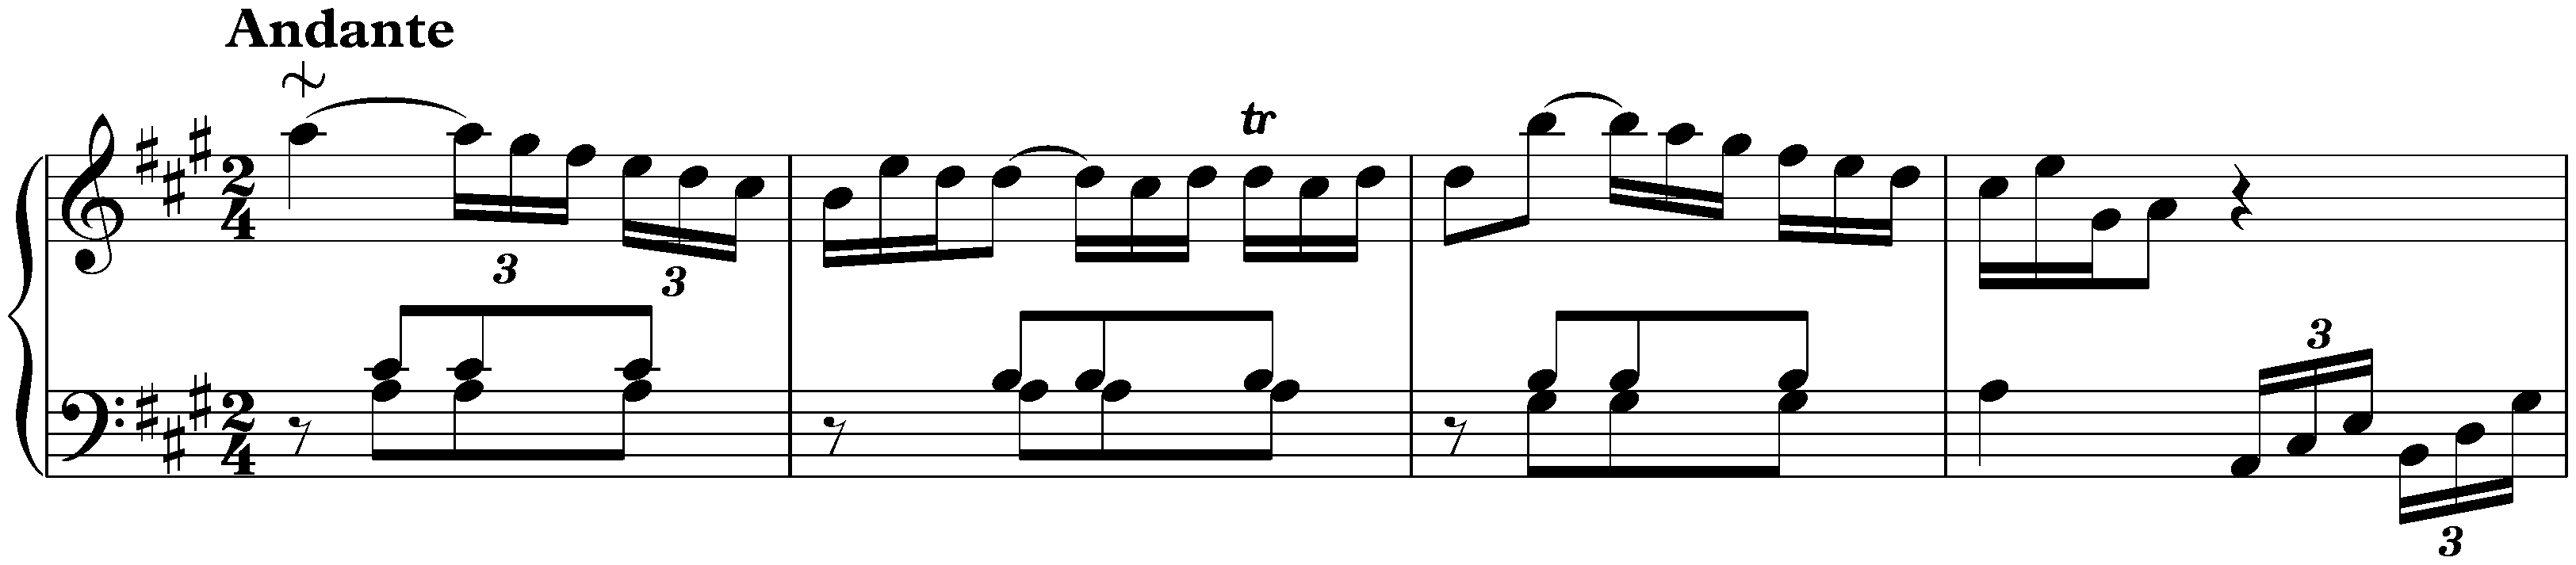 Sonata in A major, Hob. XVI:12; 1. Andante